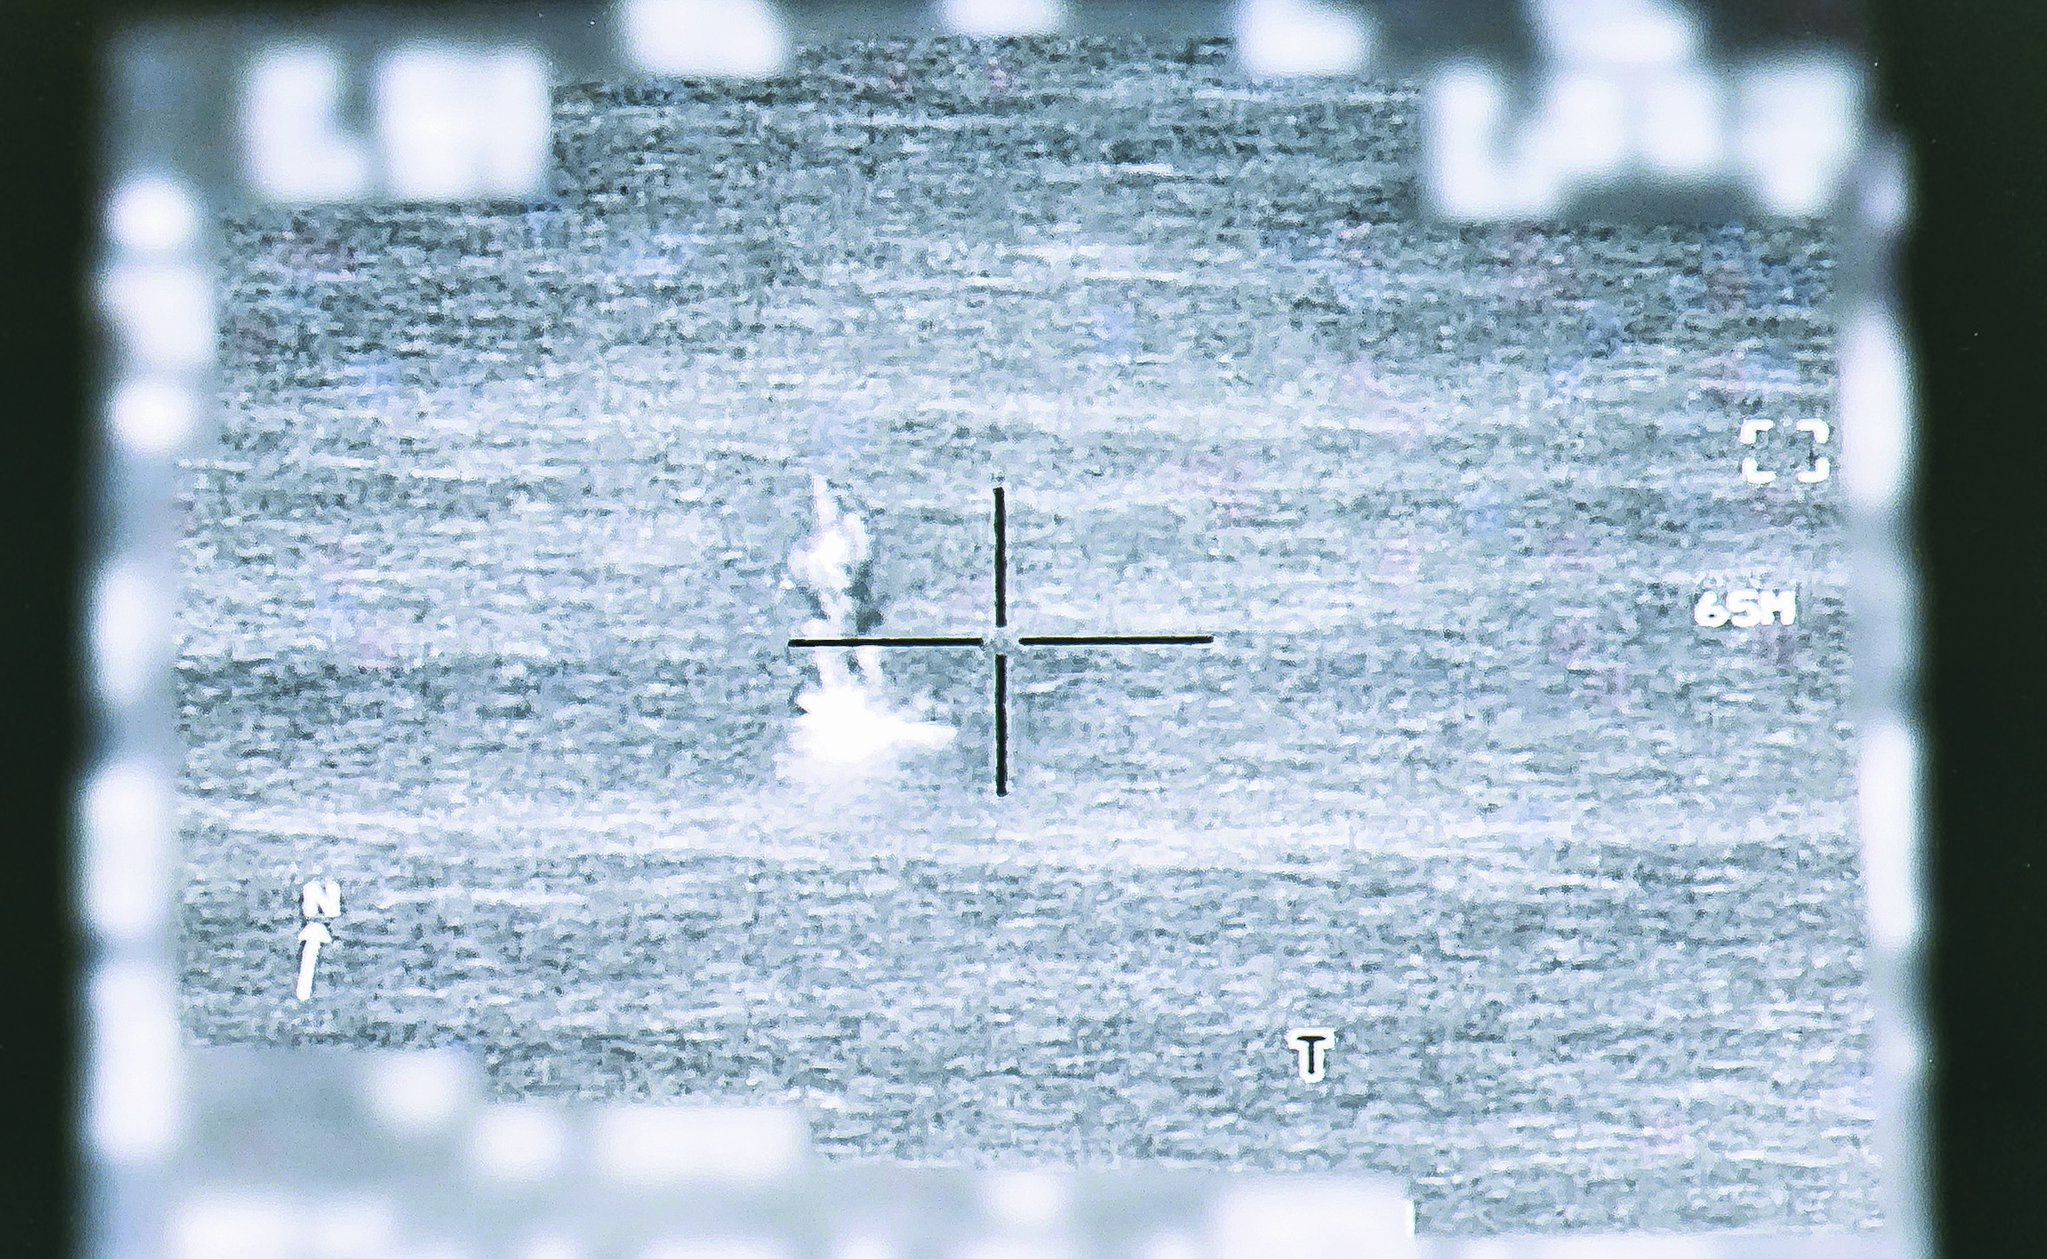 F-15K에서 발사한 공대지미사일 SLAM-ER이 공해상에 명중하는 장면. 공군 영상 캡처